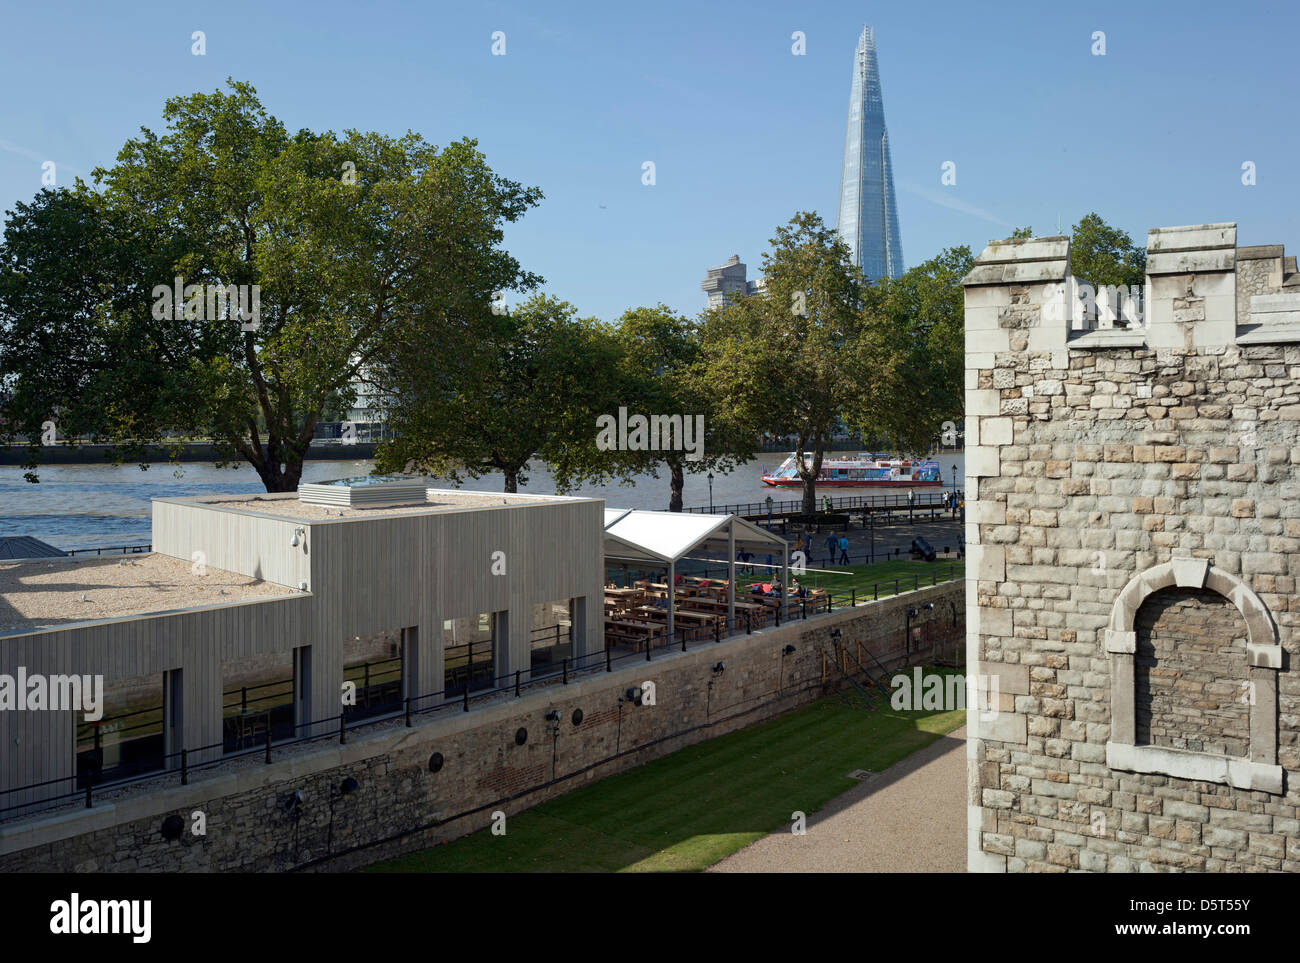 Tower Wharf Cafe, London, United Kingdom. Architect: Tony Fretton Architects Ltd, 2012. From north approach on Tower Bridge towa Stock Photo